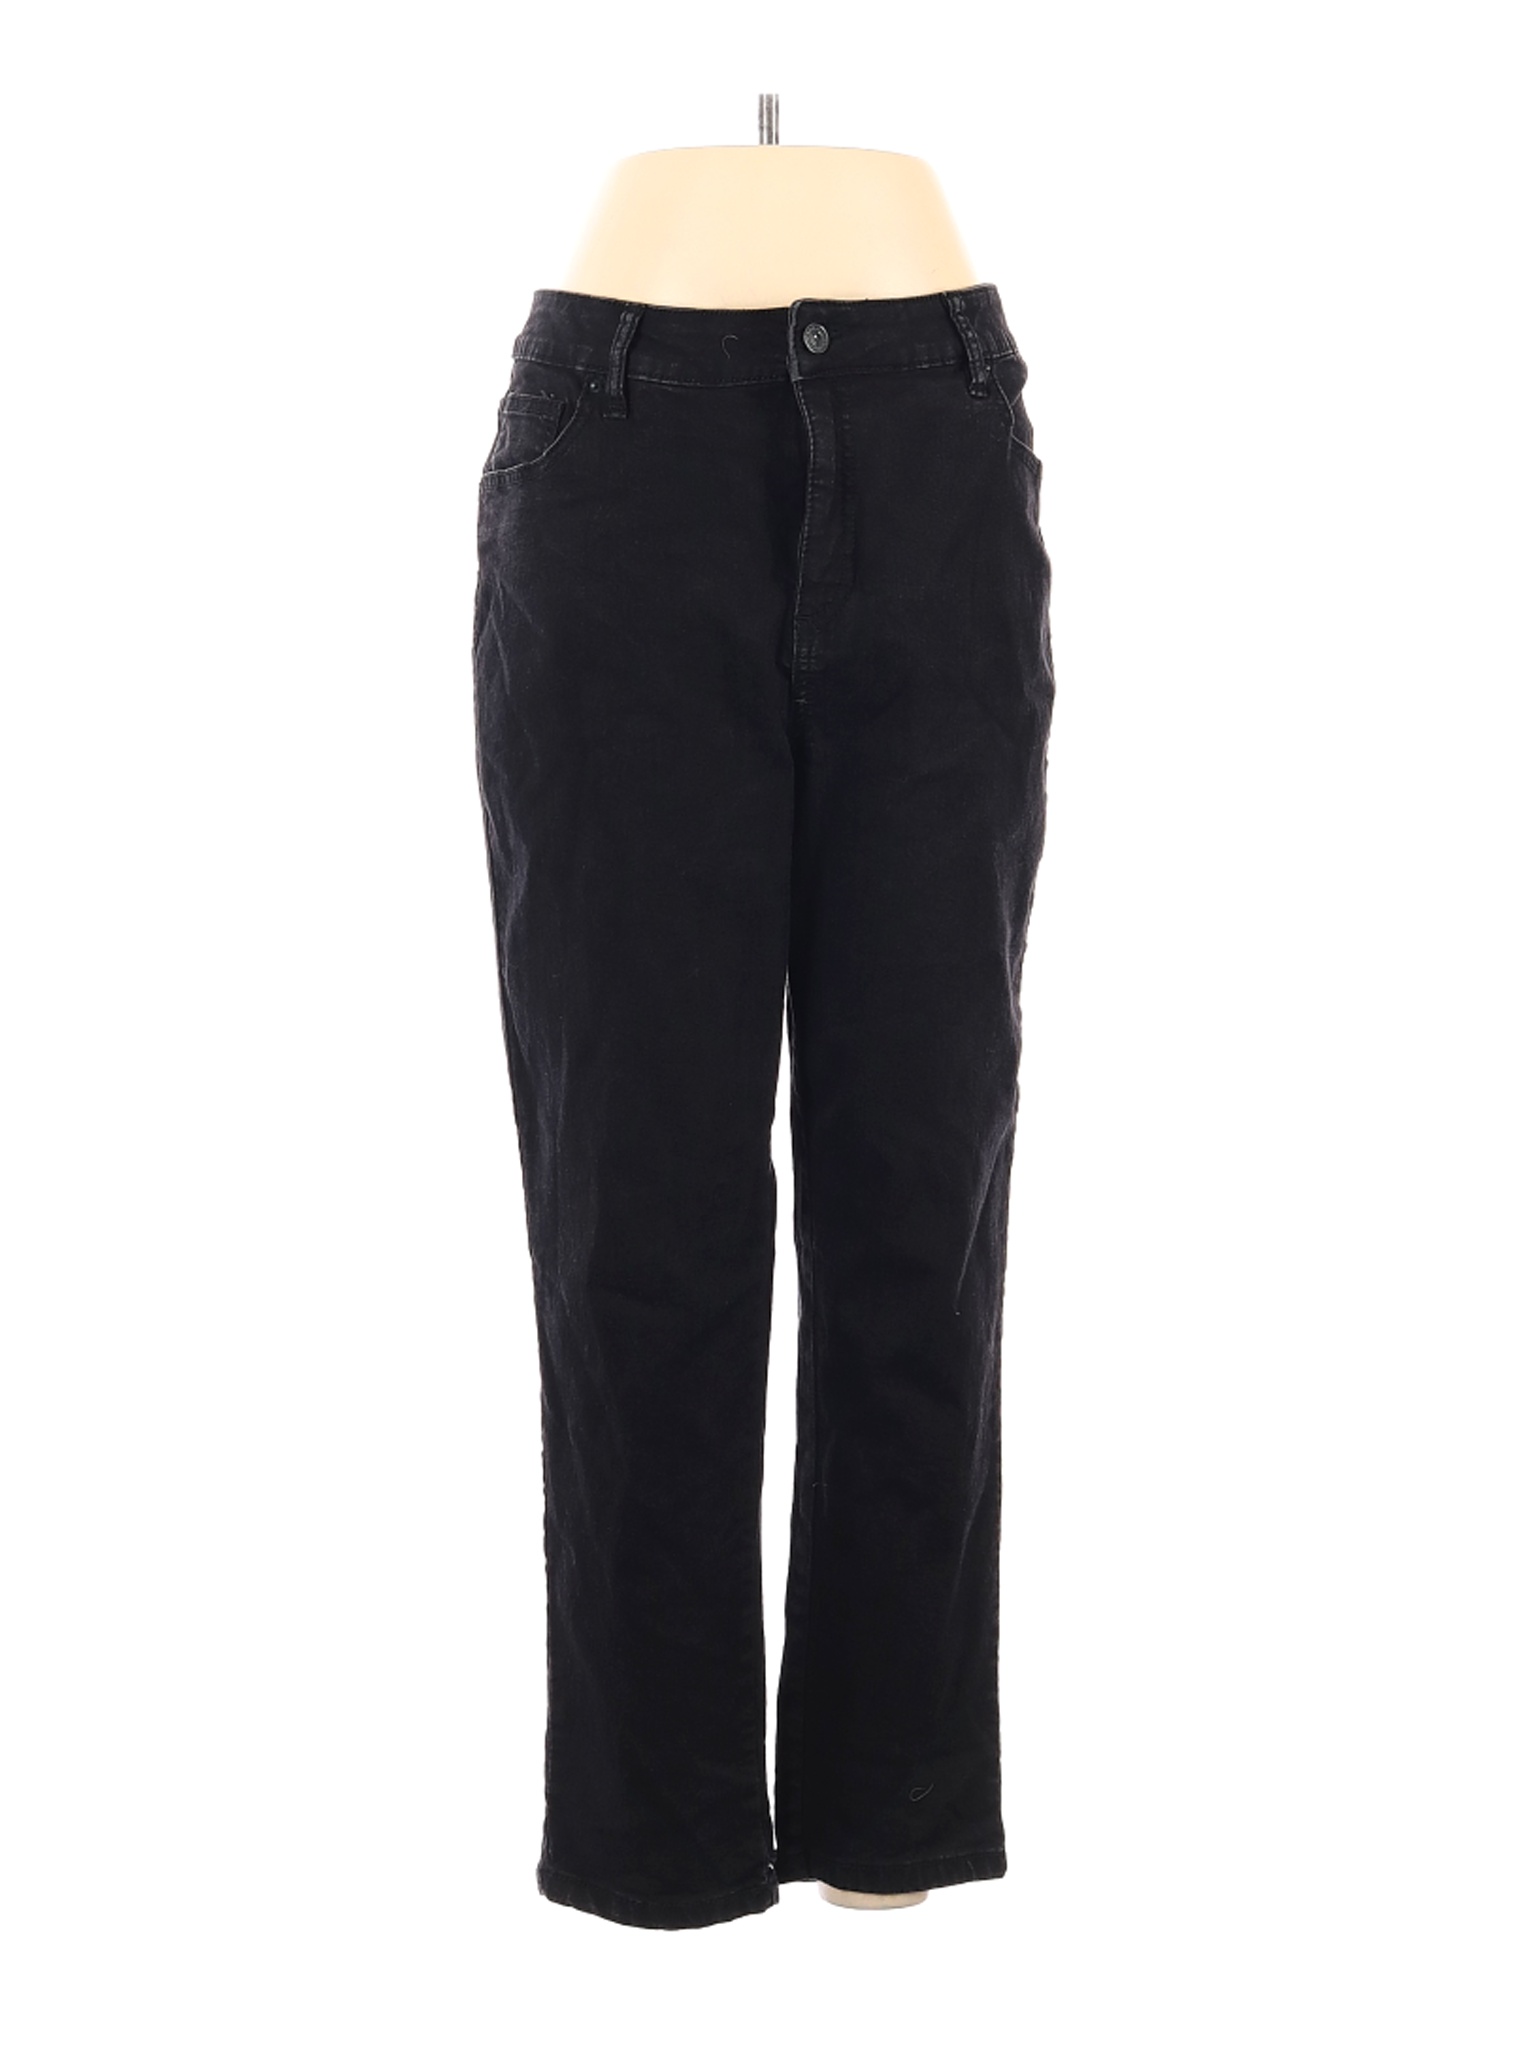 Basic Editions Women Black Jeans 14 | eBay